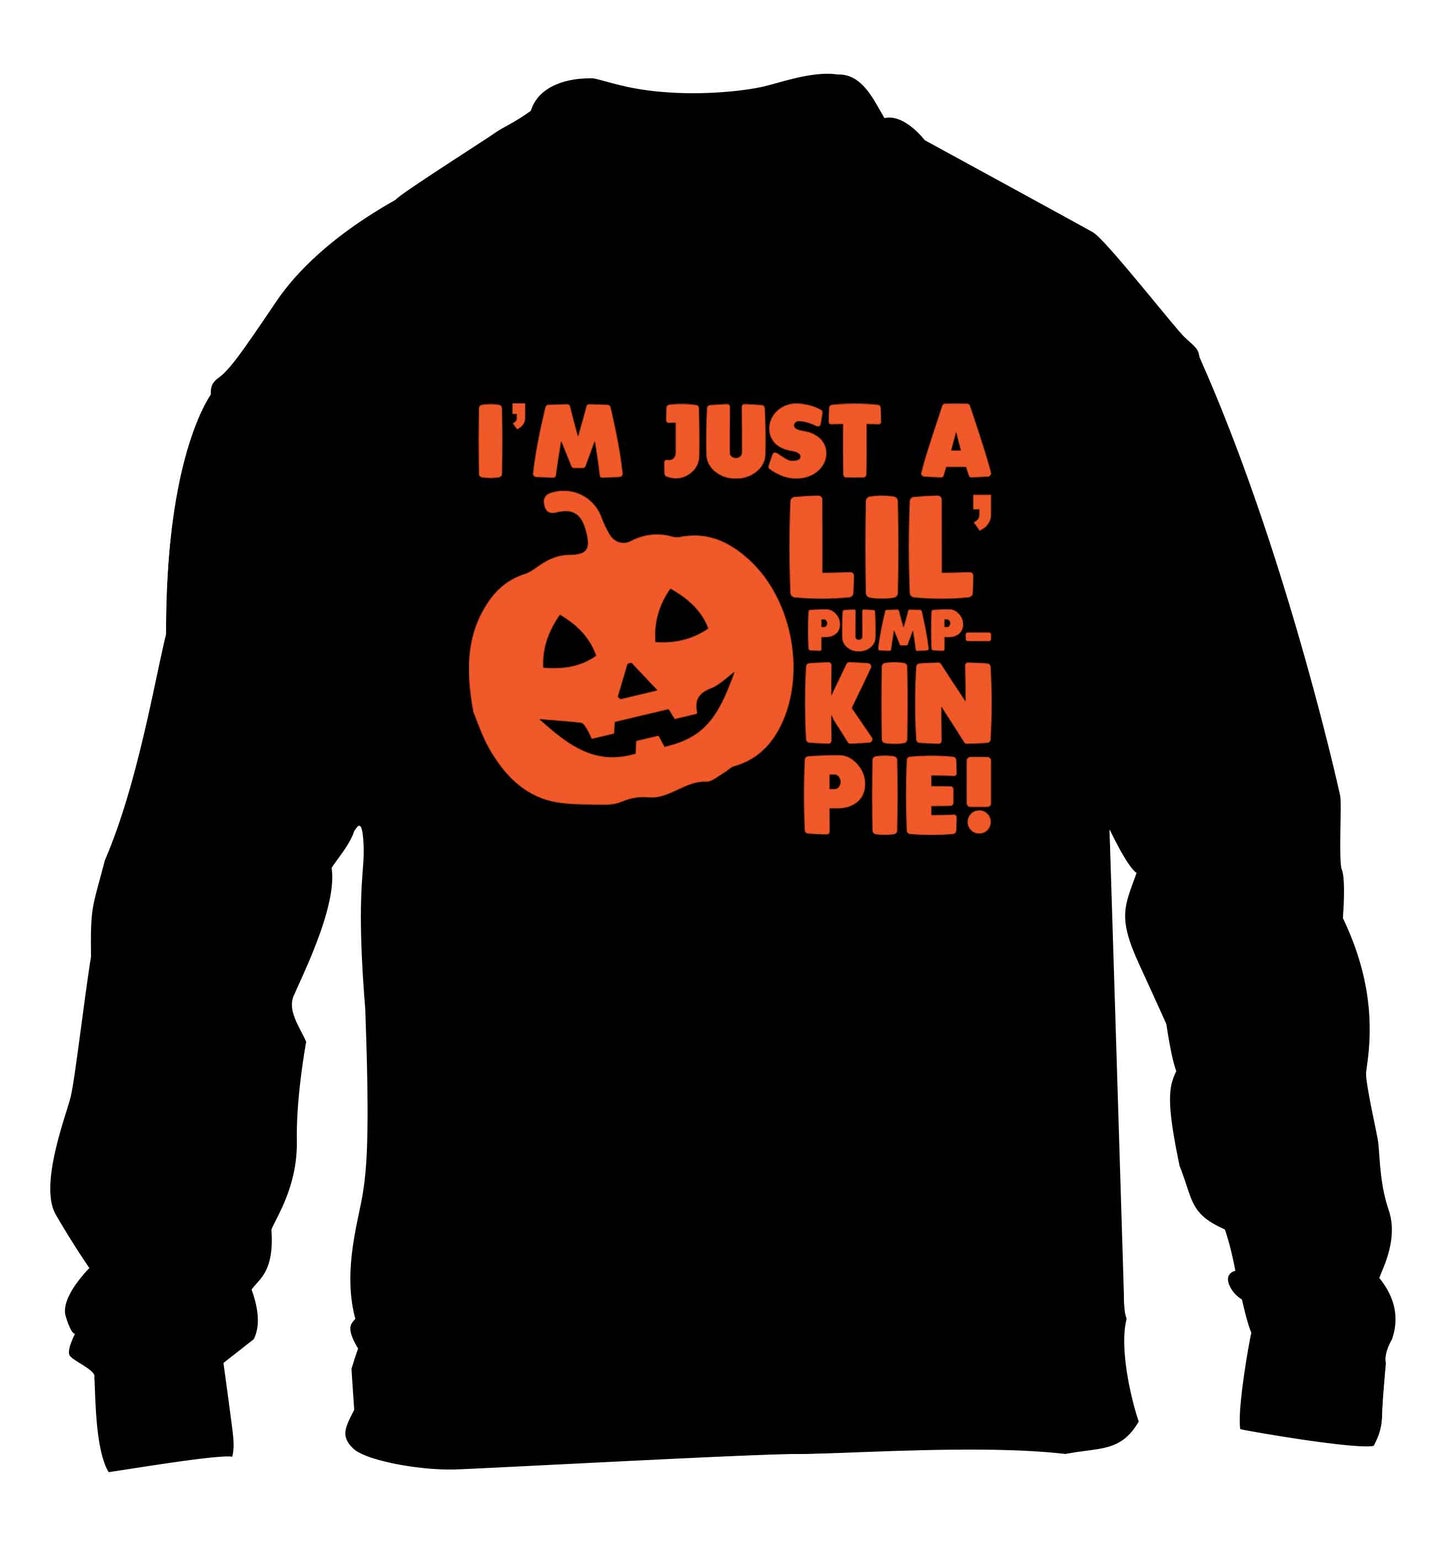 I'm just a lil' pumpkin pie children's black sweater 12-13 Years